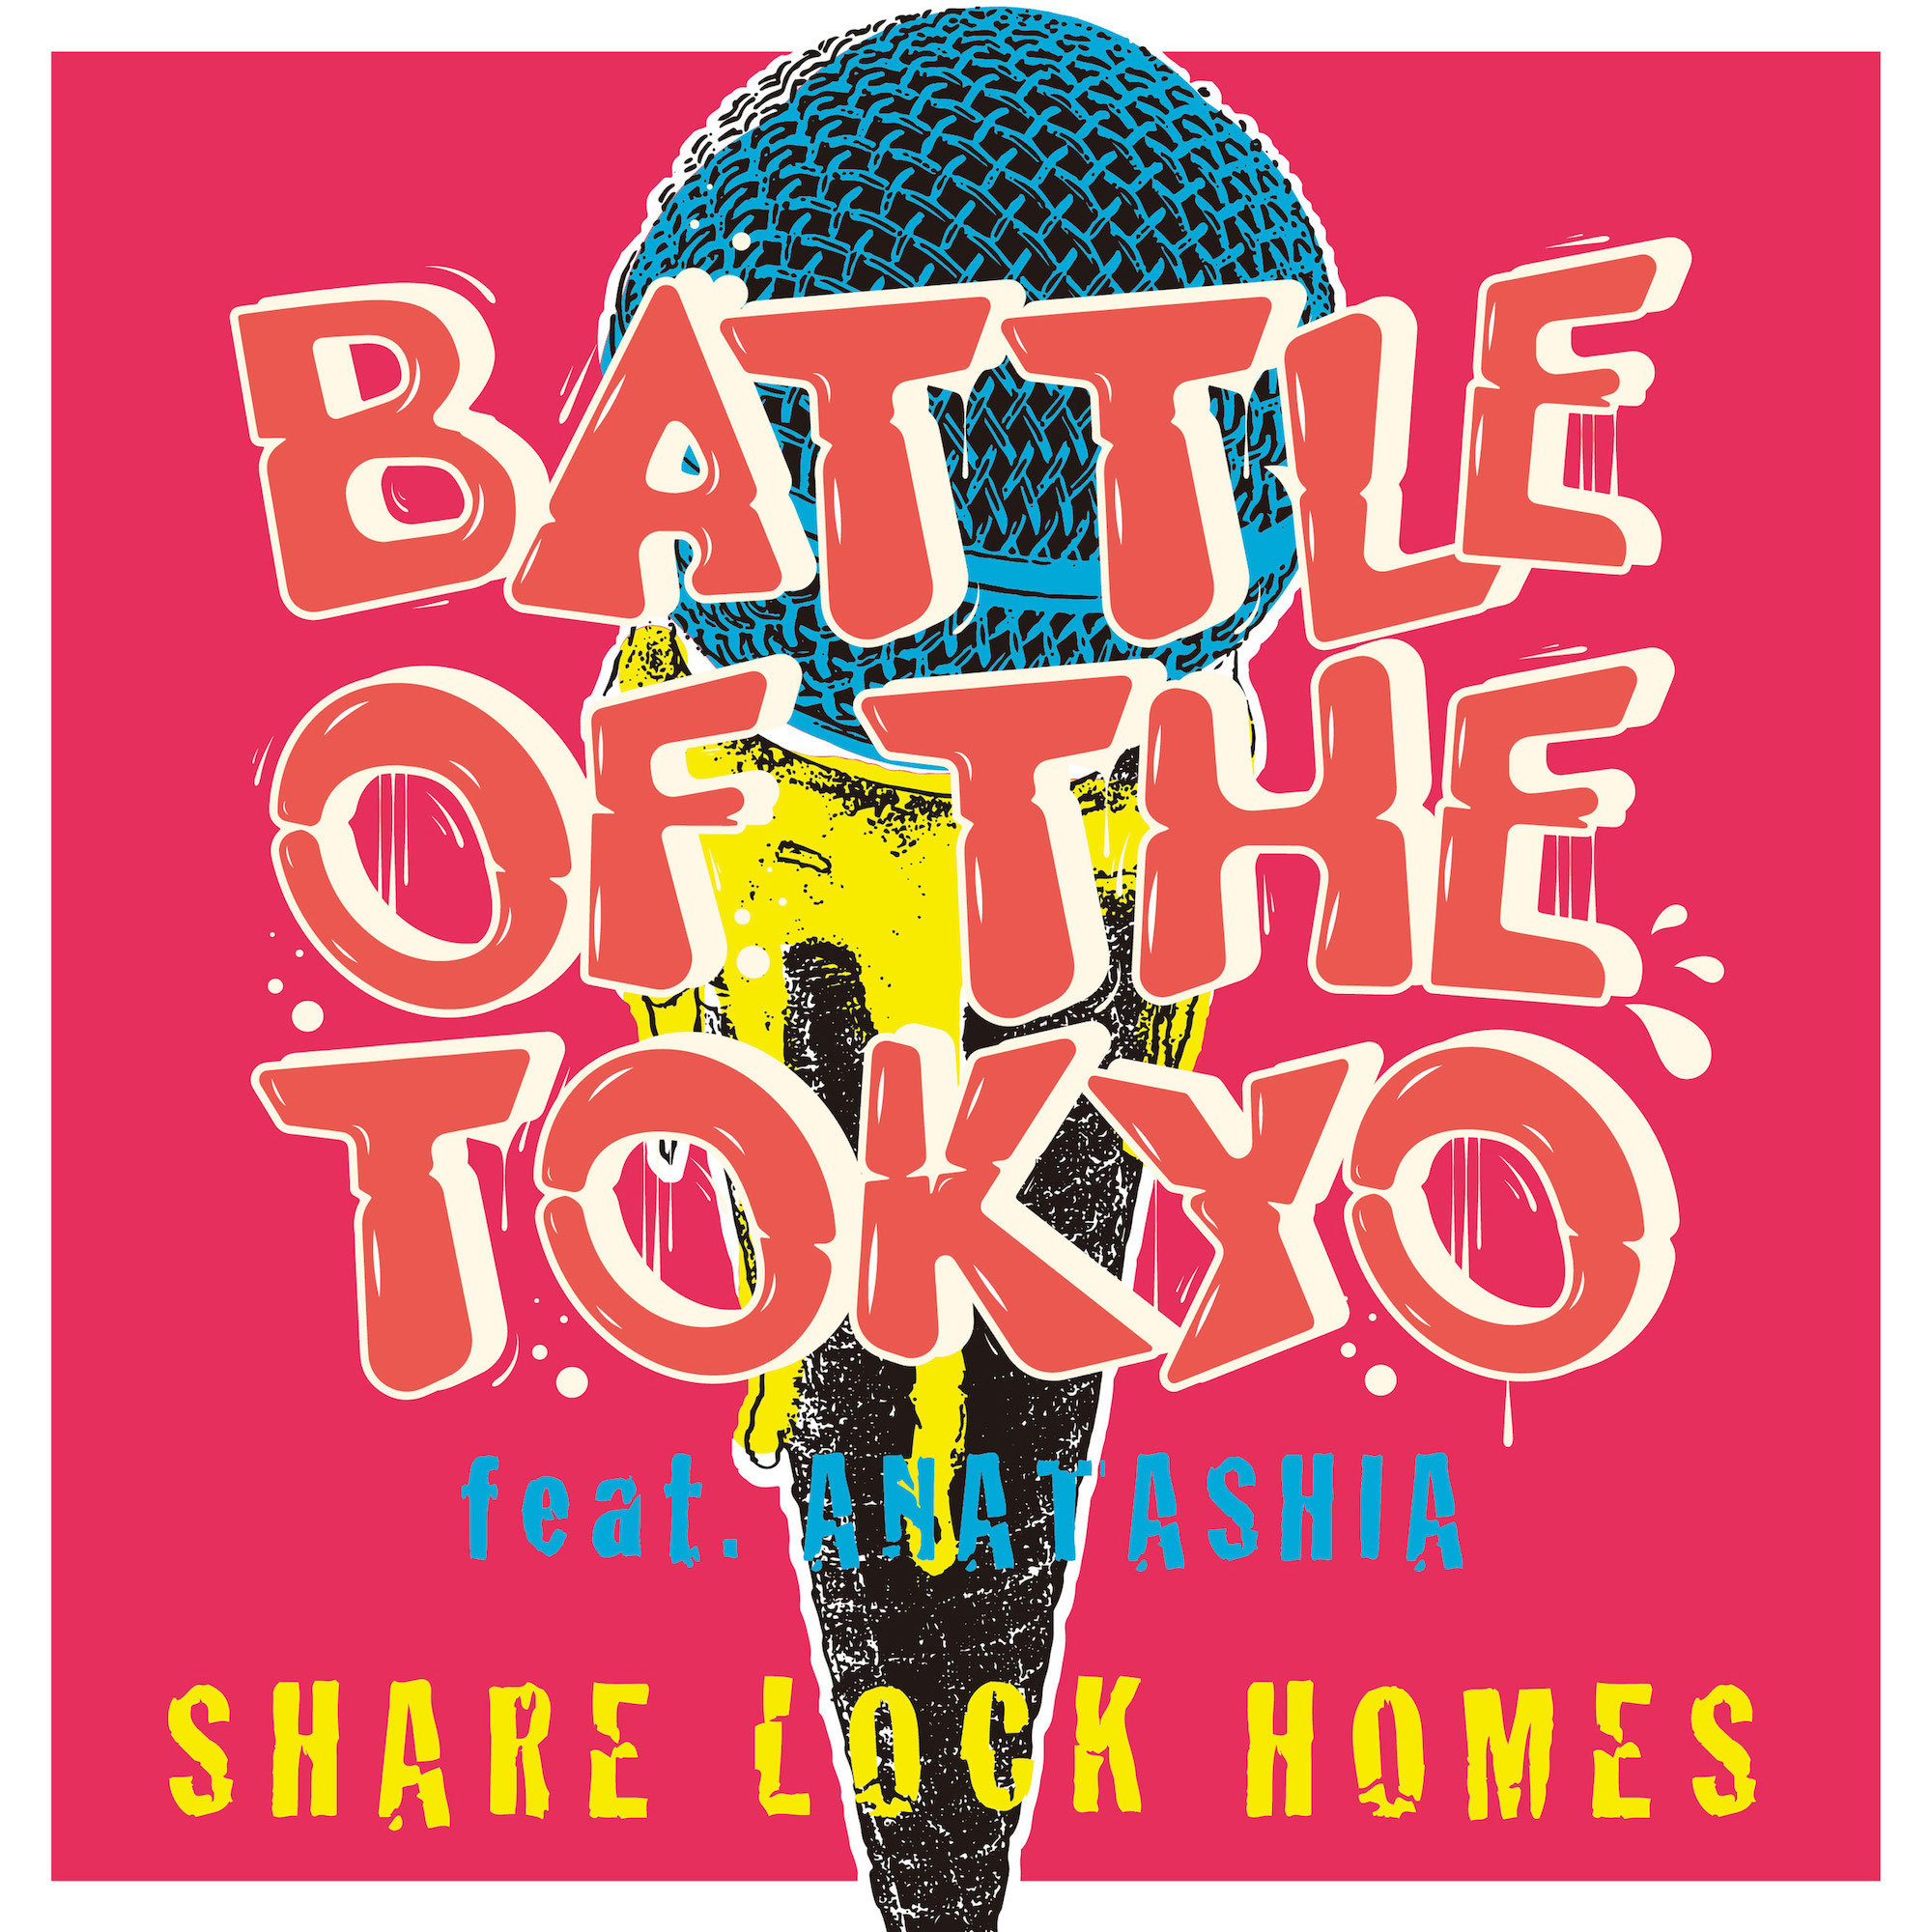 BATTLE OF THE TOKYO feat.ANATASHIA